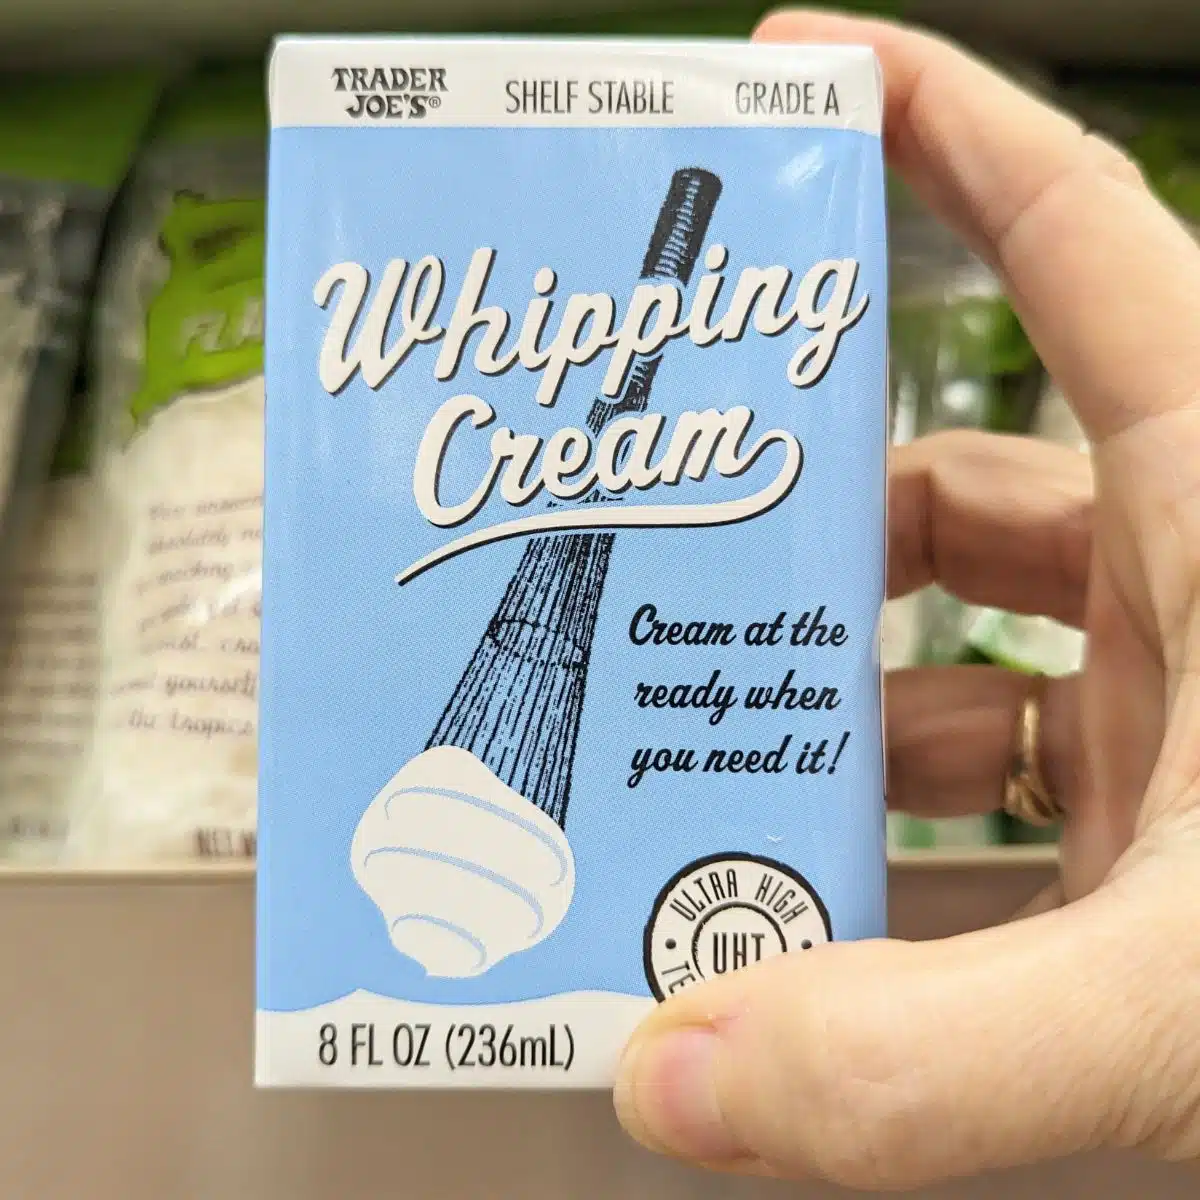 Trader Joe's Shelf-Stable Whipping Cream.